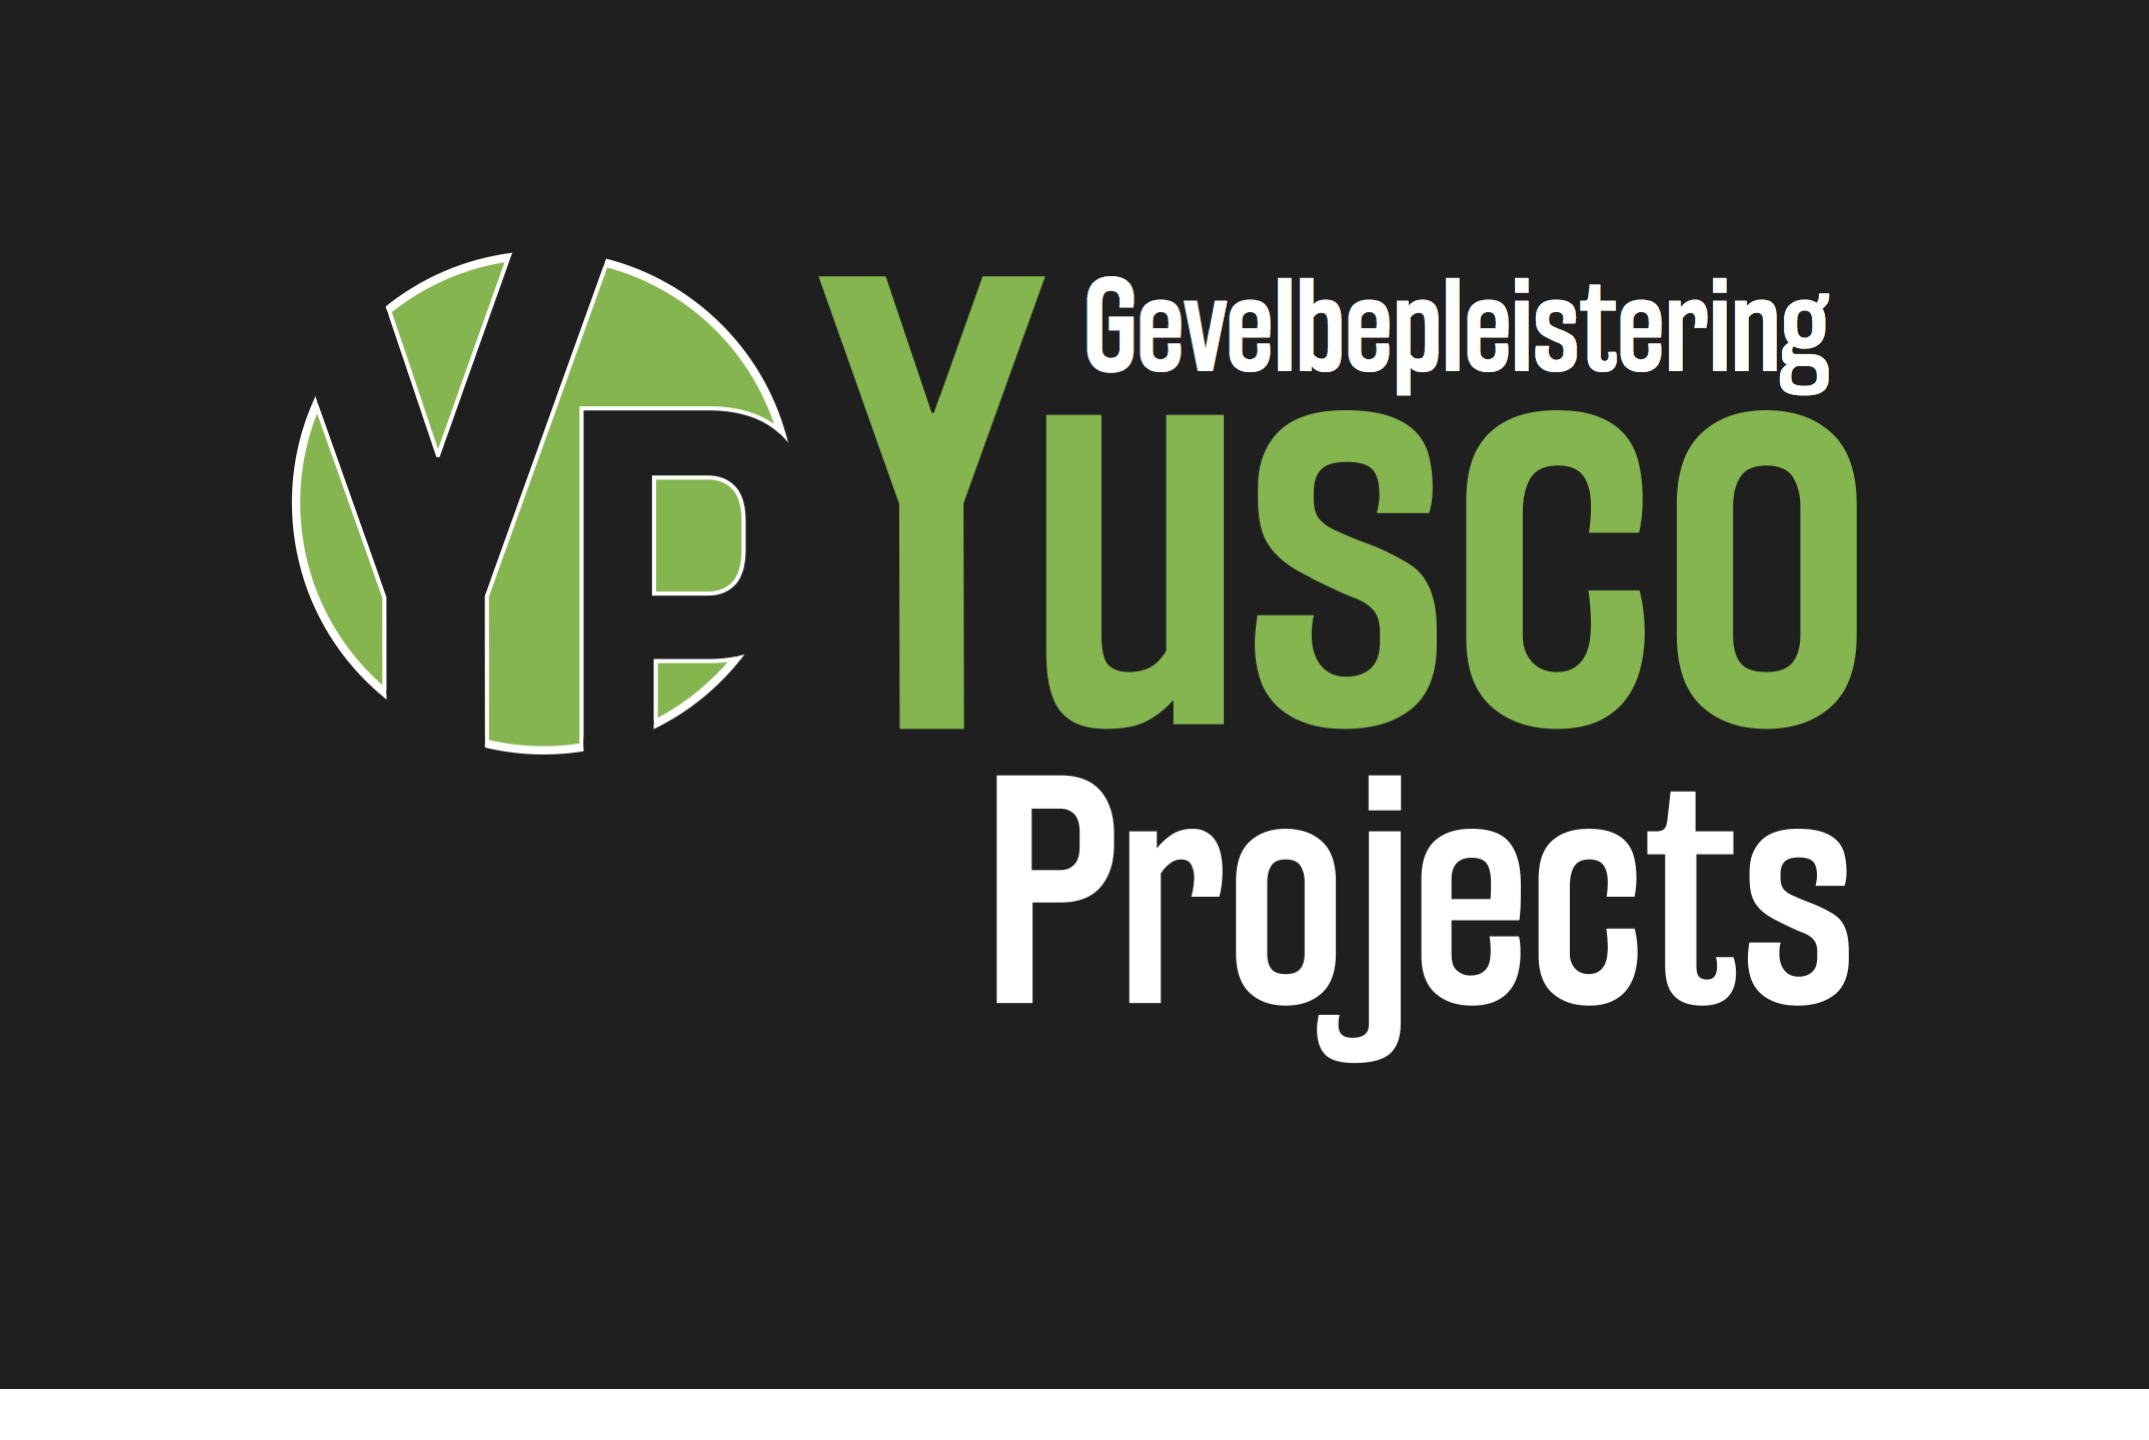 renovatieaannemers Oostakker Yusco Projects Gevelbepleistering